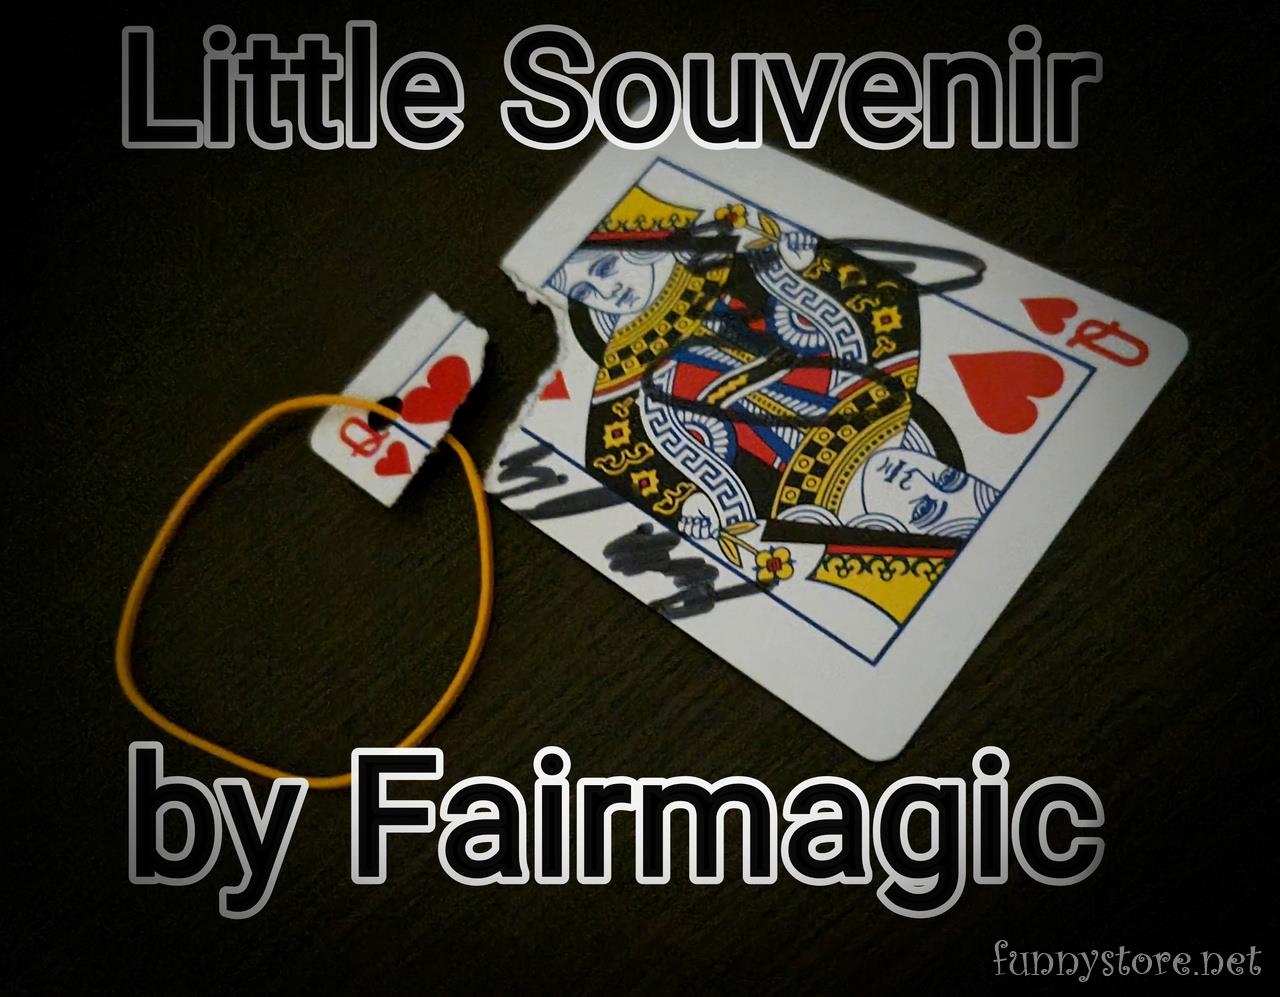 Fairmagic - Little Souvenir